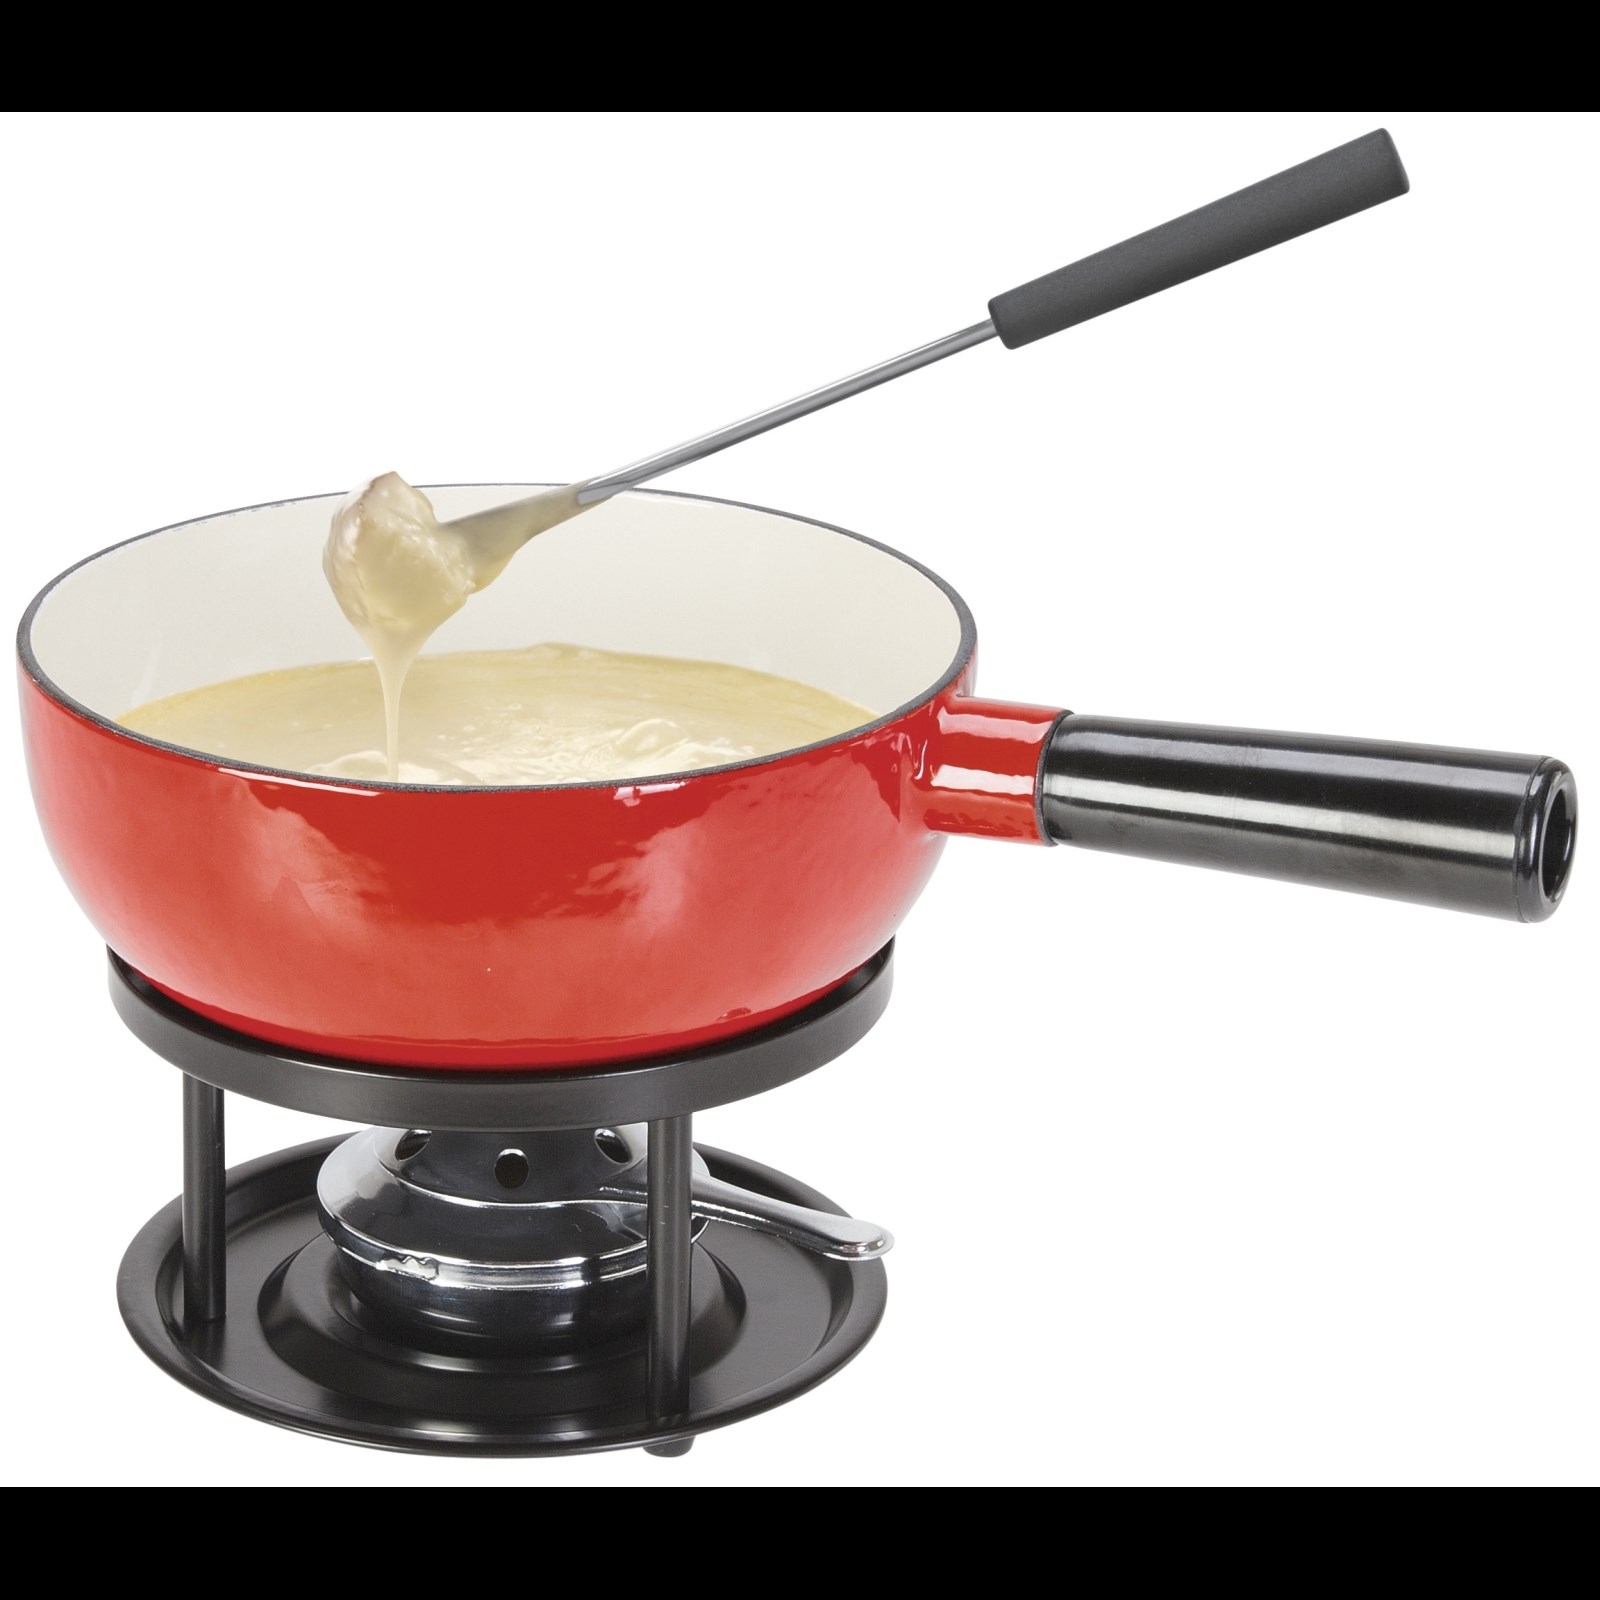 https://www.landi.ch/ImageOriginal/Img/product/018/975/18975_fondue-gourmet-18-36-22-cm_18975_0.jpg?width=1600&height=1600&mode=pad&bgcolor=fff